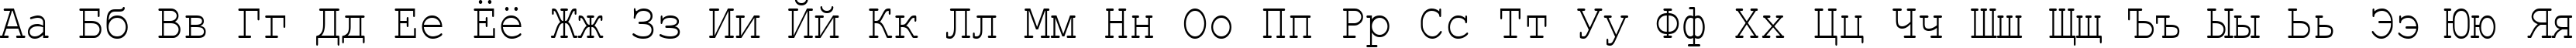 Пример написания русского алфавита шрифтом Courier New Cyr_85n